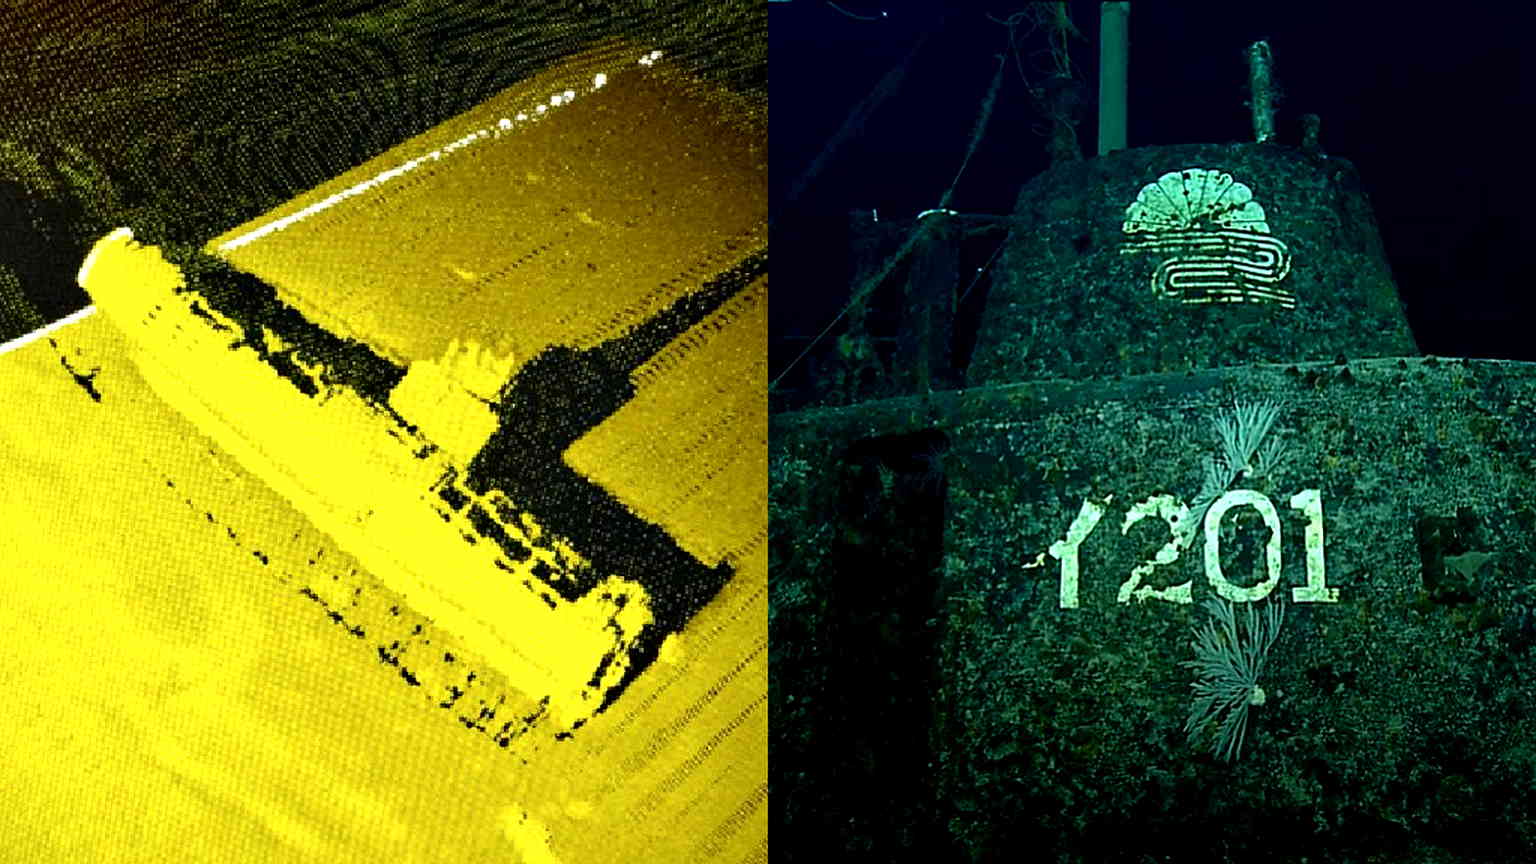 Rare video showcases sunken WWII Japanese submarines off Hawaii’s coast